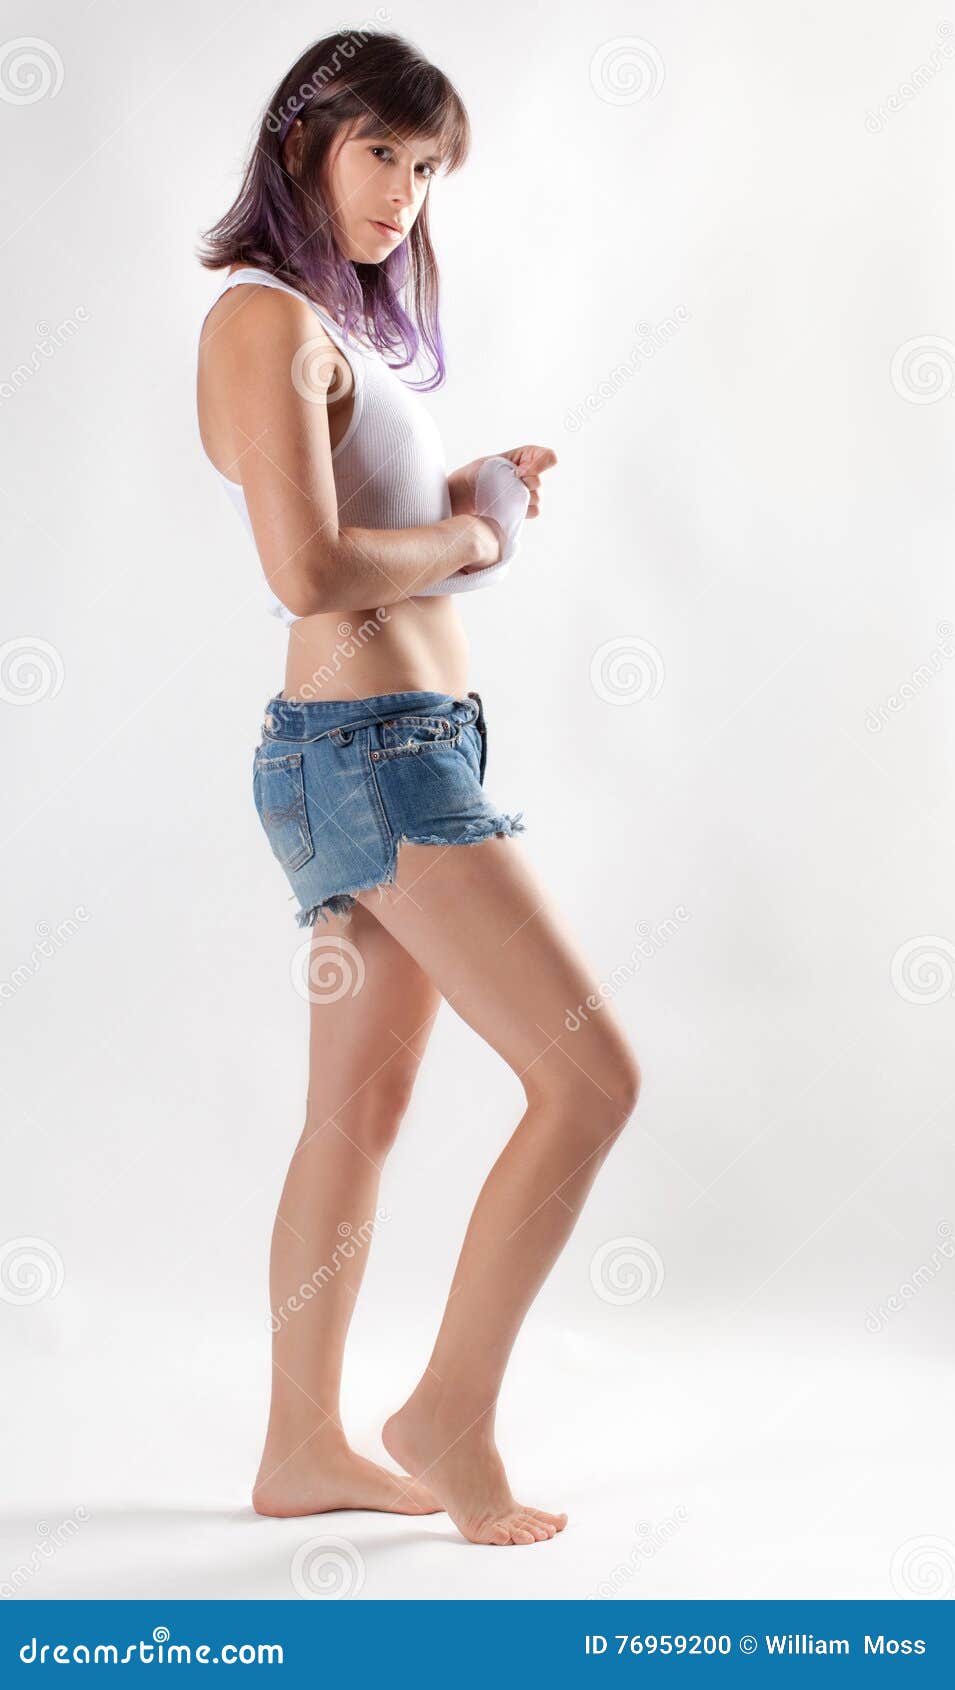 Woman White Tank Top Jean Shorts Stock Photos - Free & Royalty